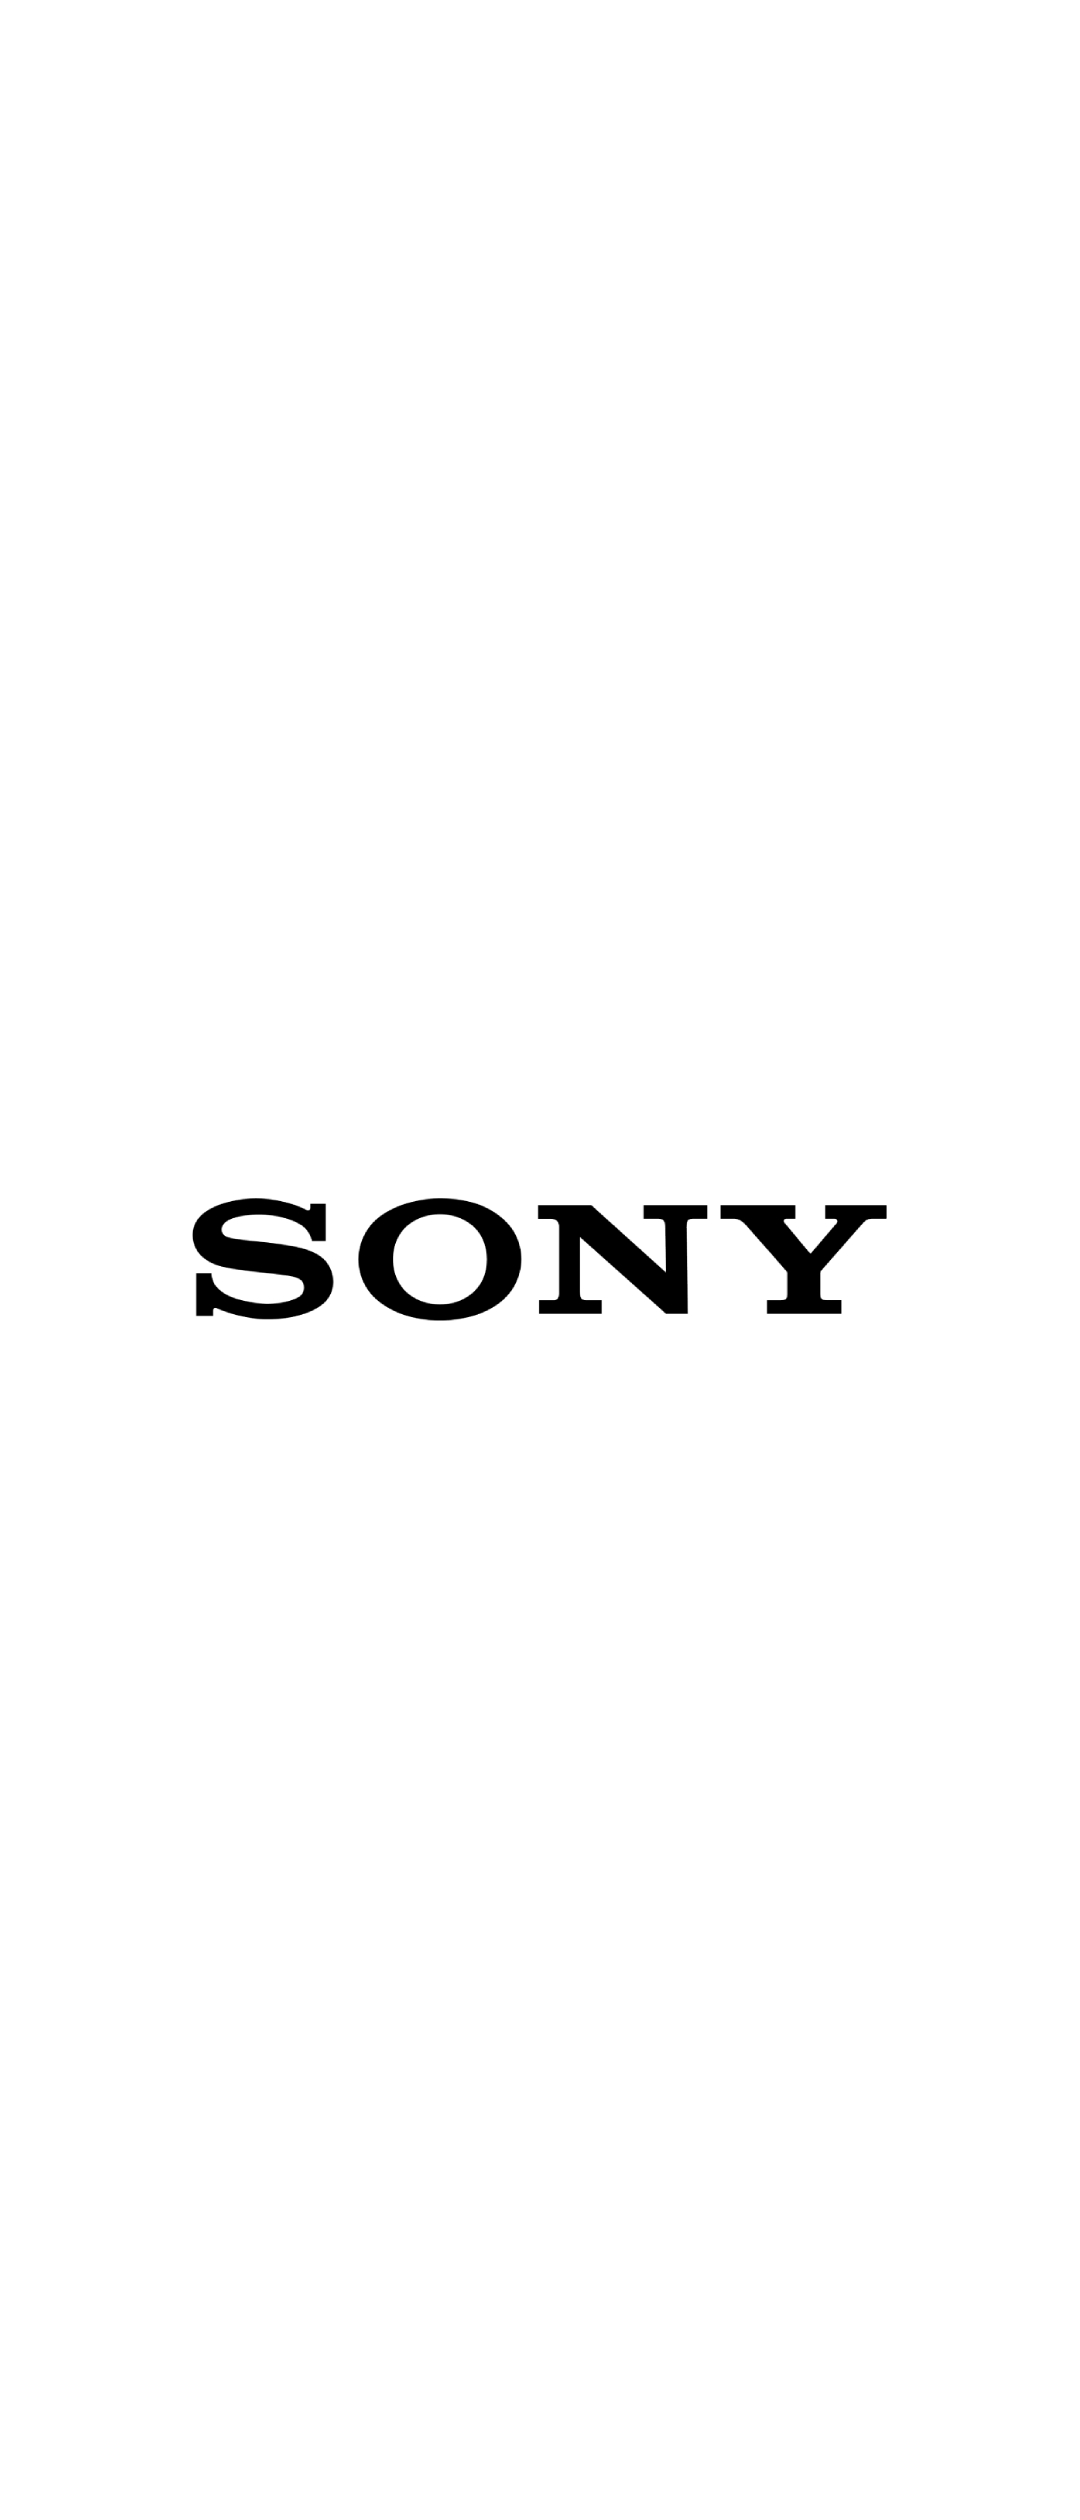 Sony ソニー Xperia 5 壁紙 待ち受け Sumaran